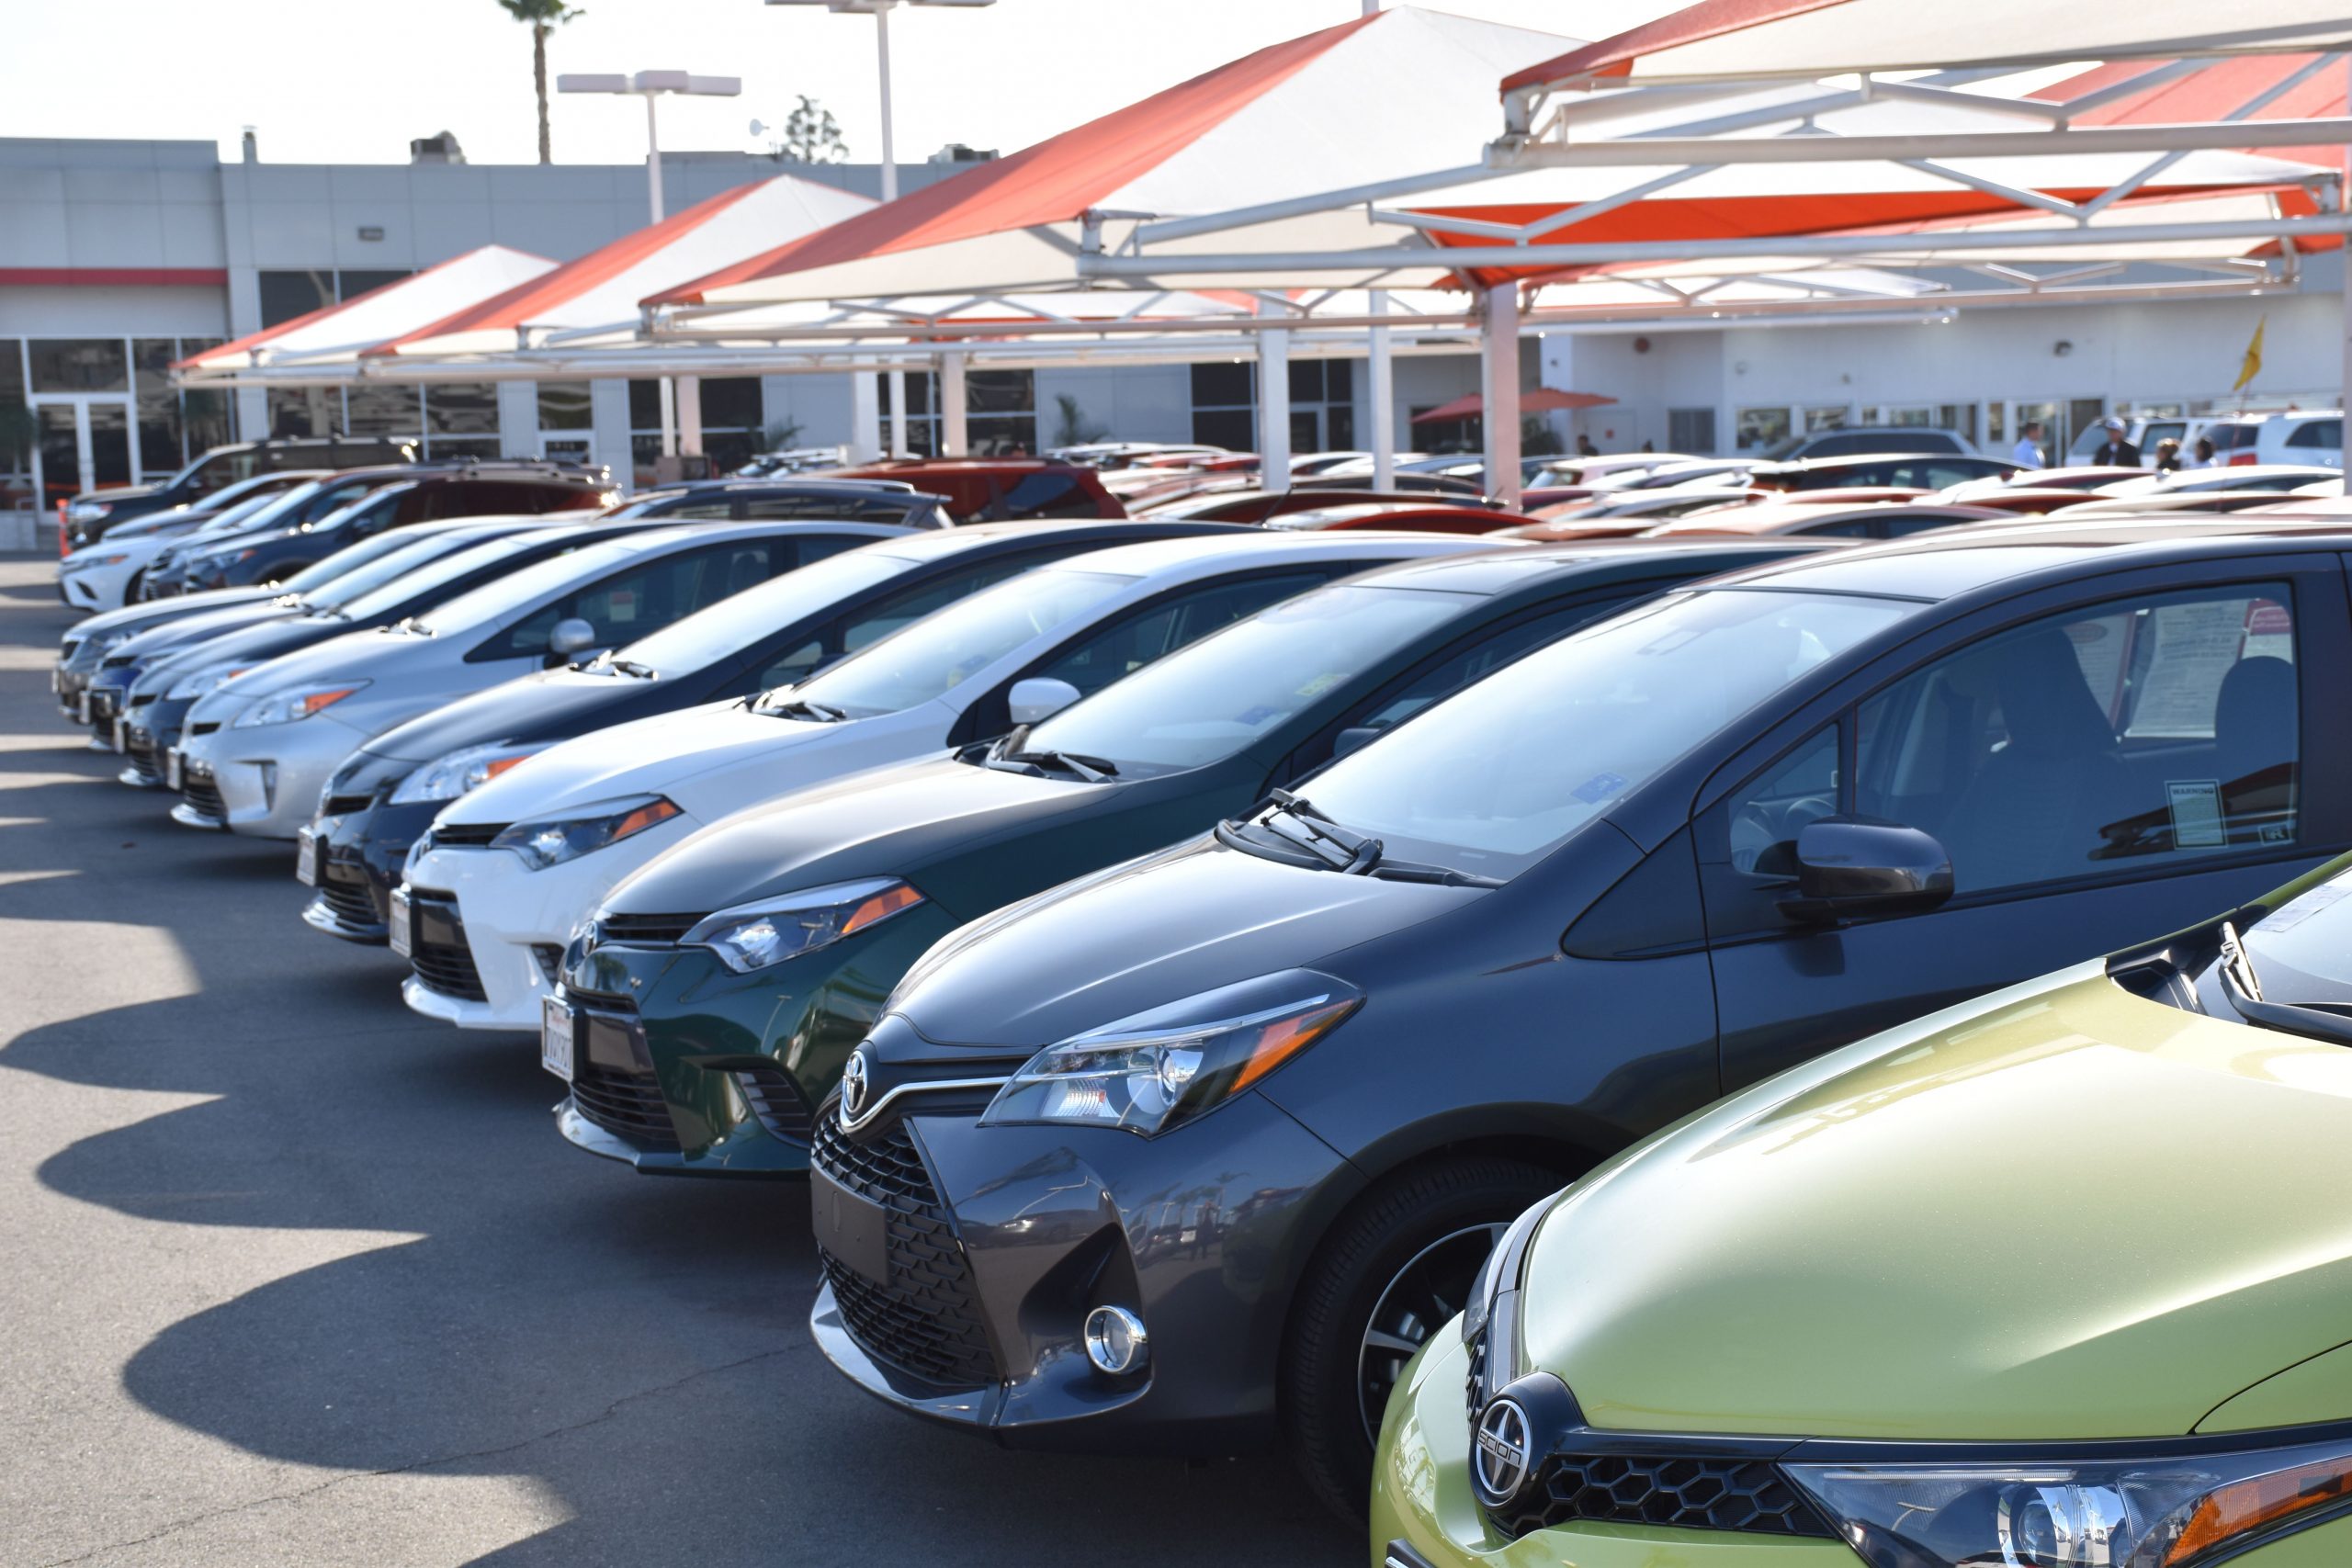 Toyota Dealership Used Cars